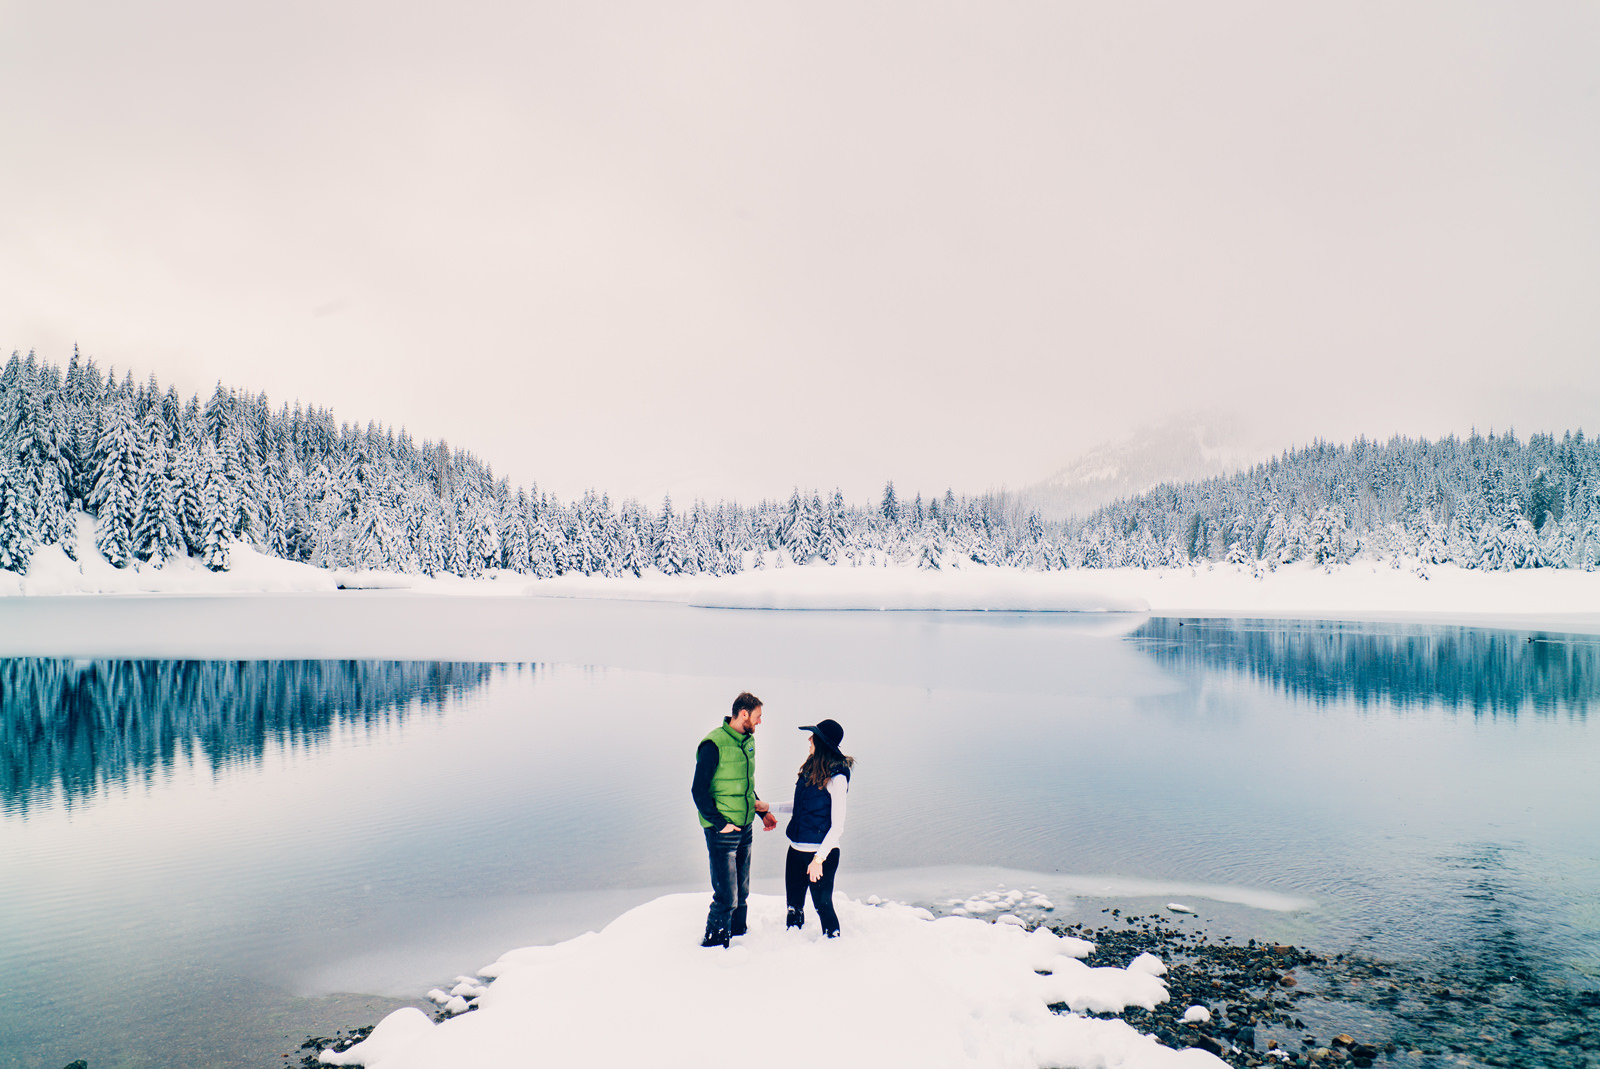 099-snowy-lake-engagement-session-by-washington-mountain-photographer-ryan-flynn.jpg